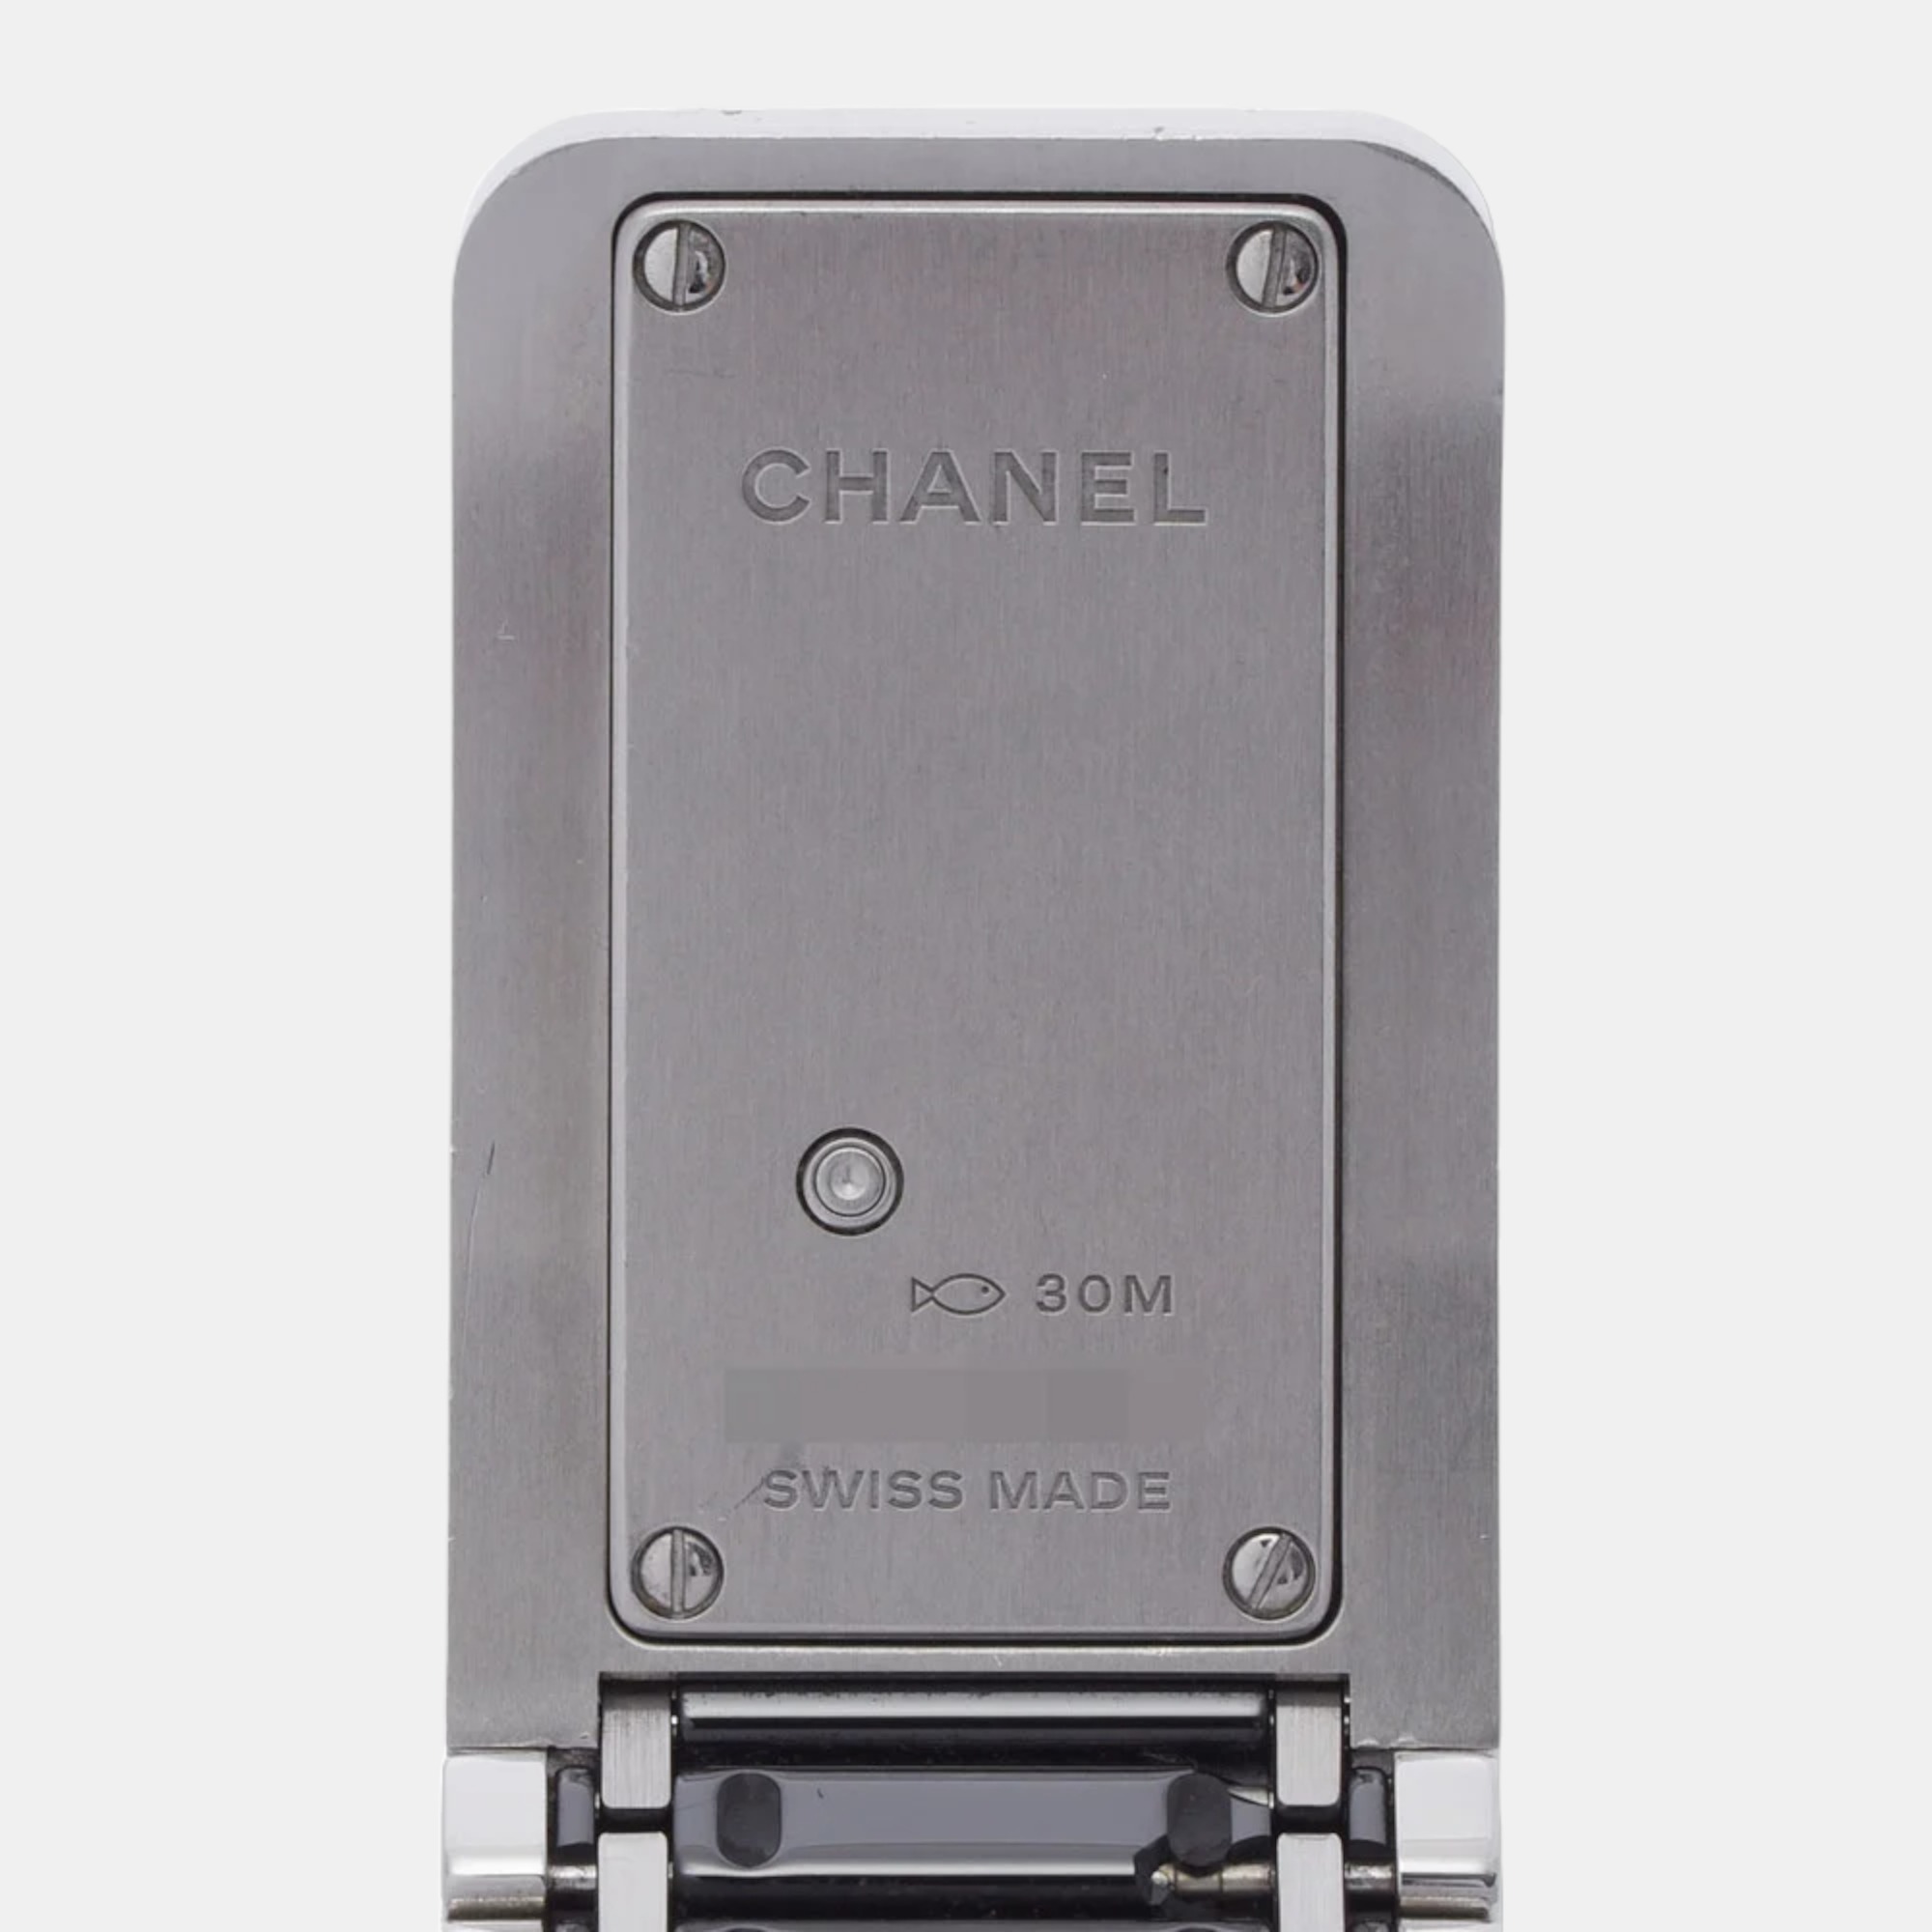 Chanel Black Stainless Steel Code Coco H5148 Quartz Women's Wristwatch 21 Mm